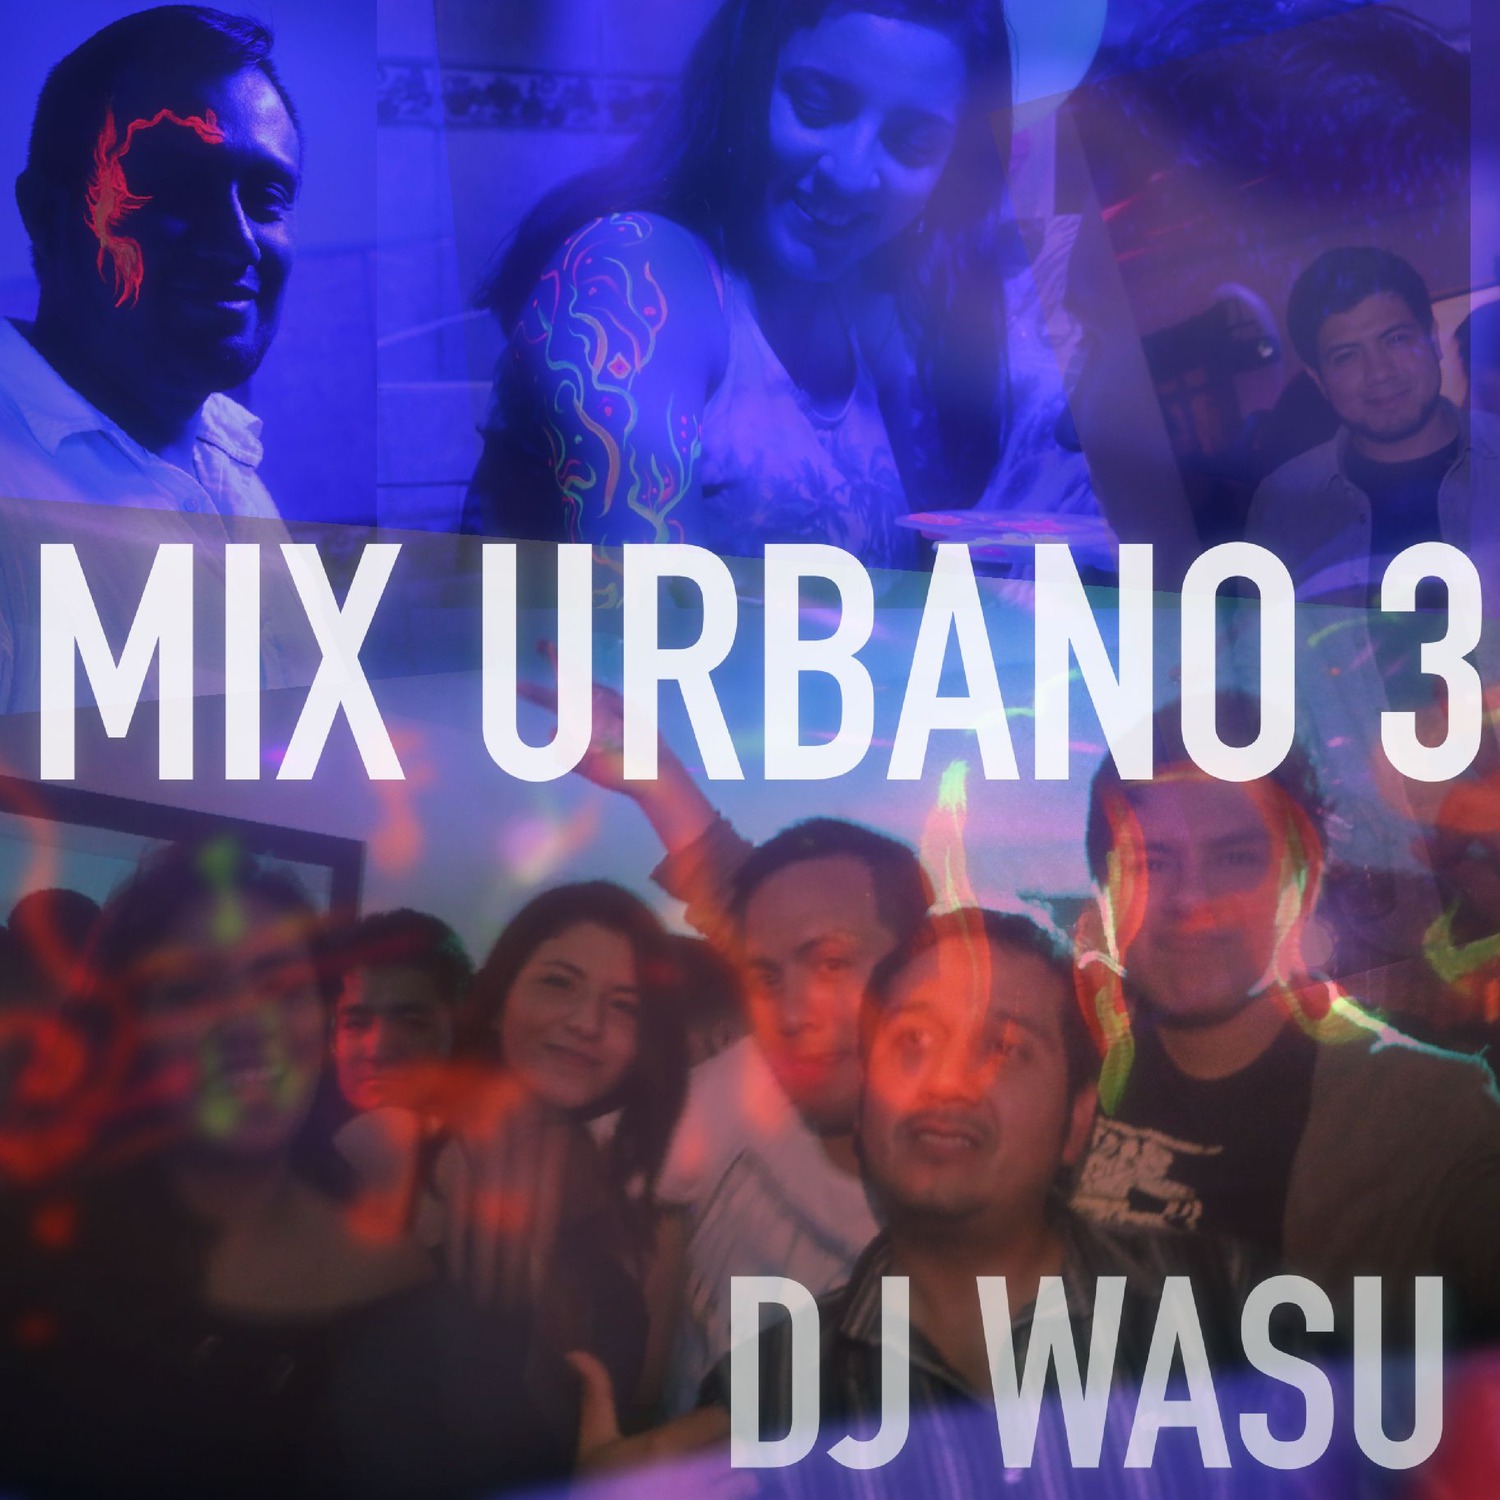 Mix Urbano 3